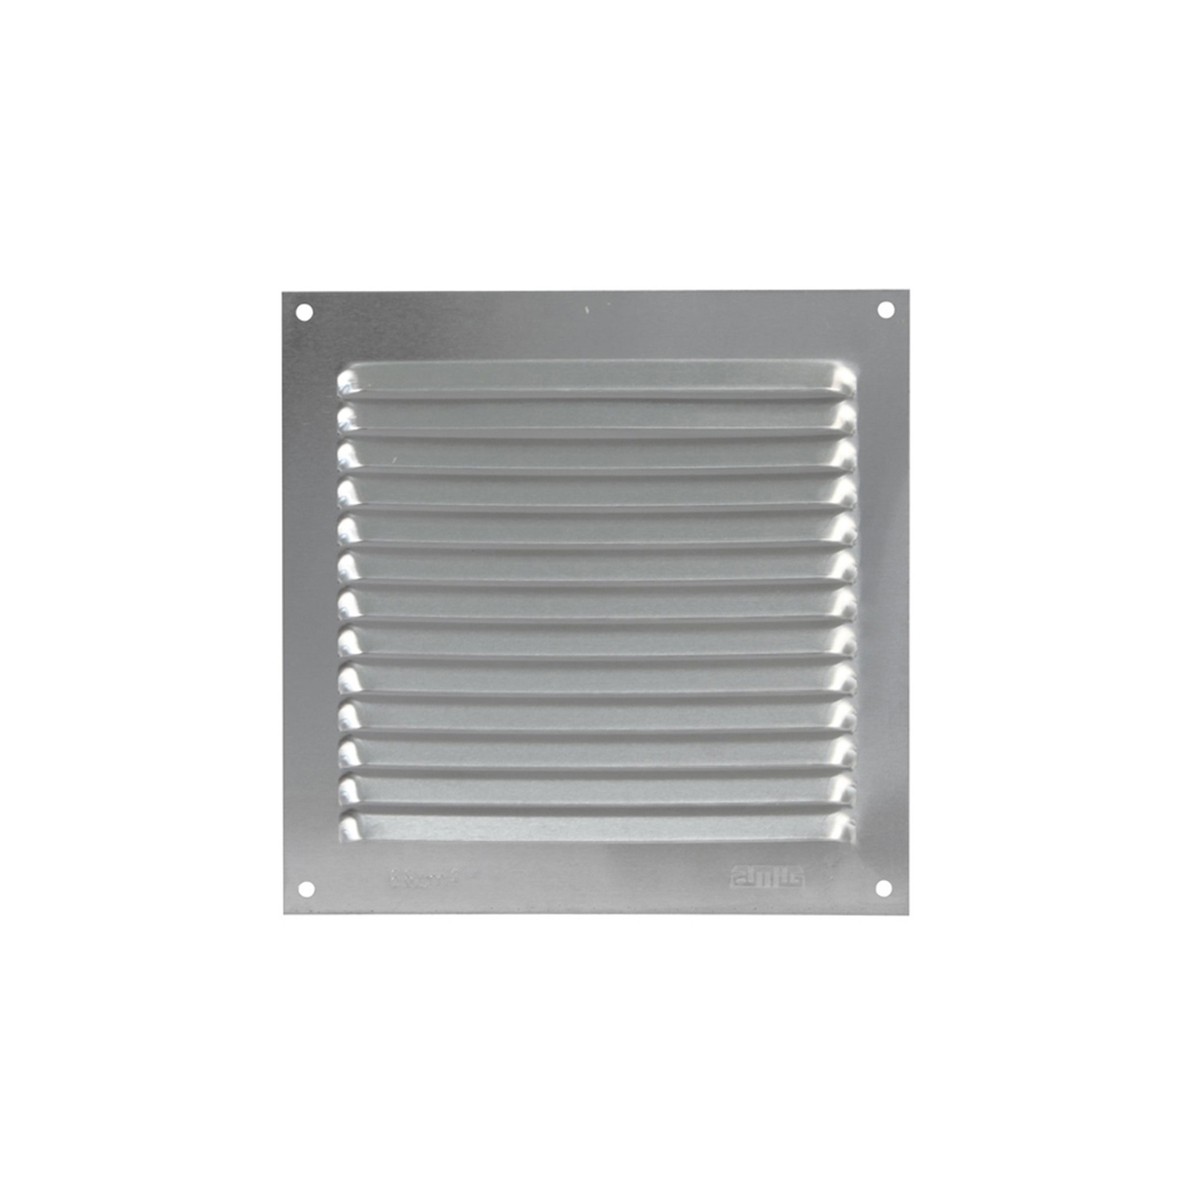 Rejilla ventilación para atornillar con mosquitera aluminio natural 20x20 cm